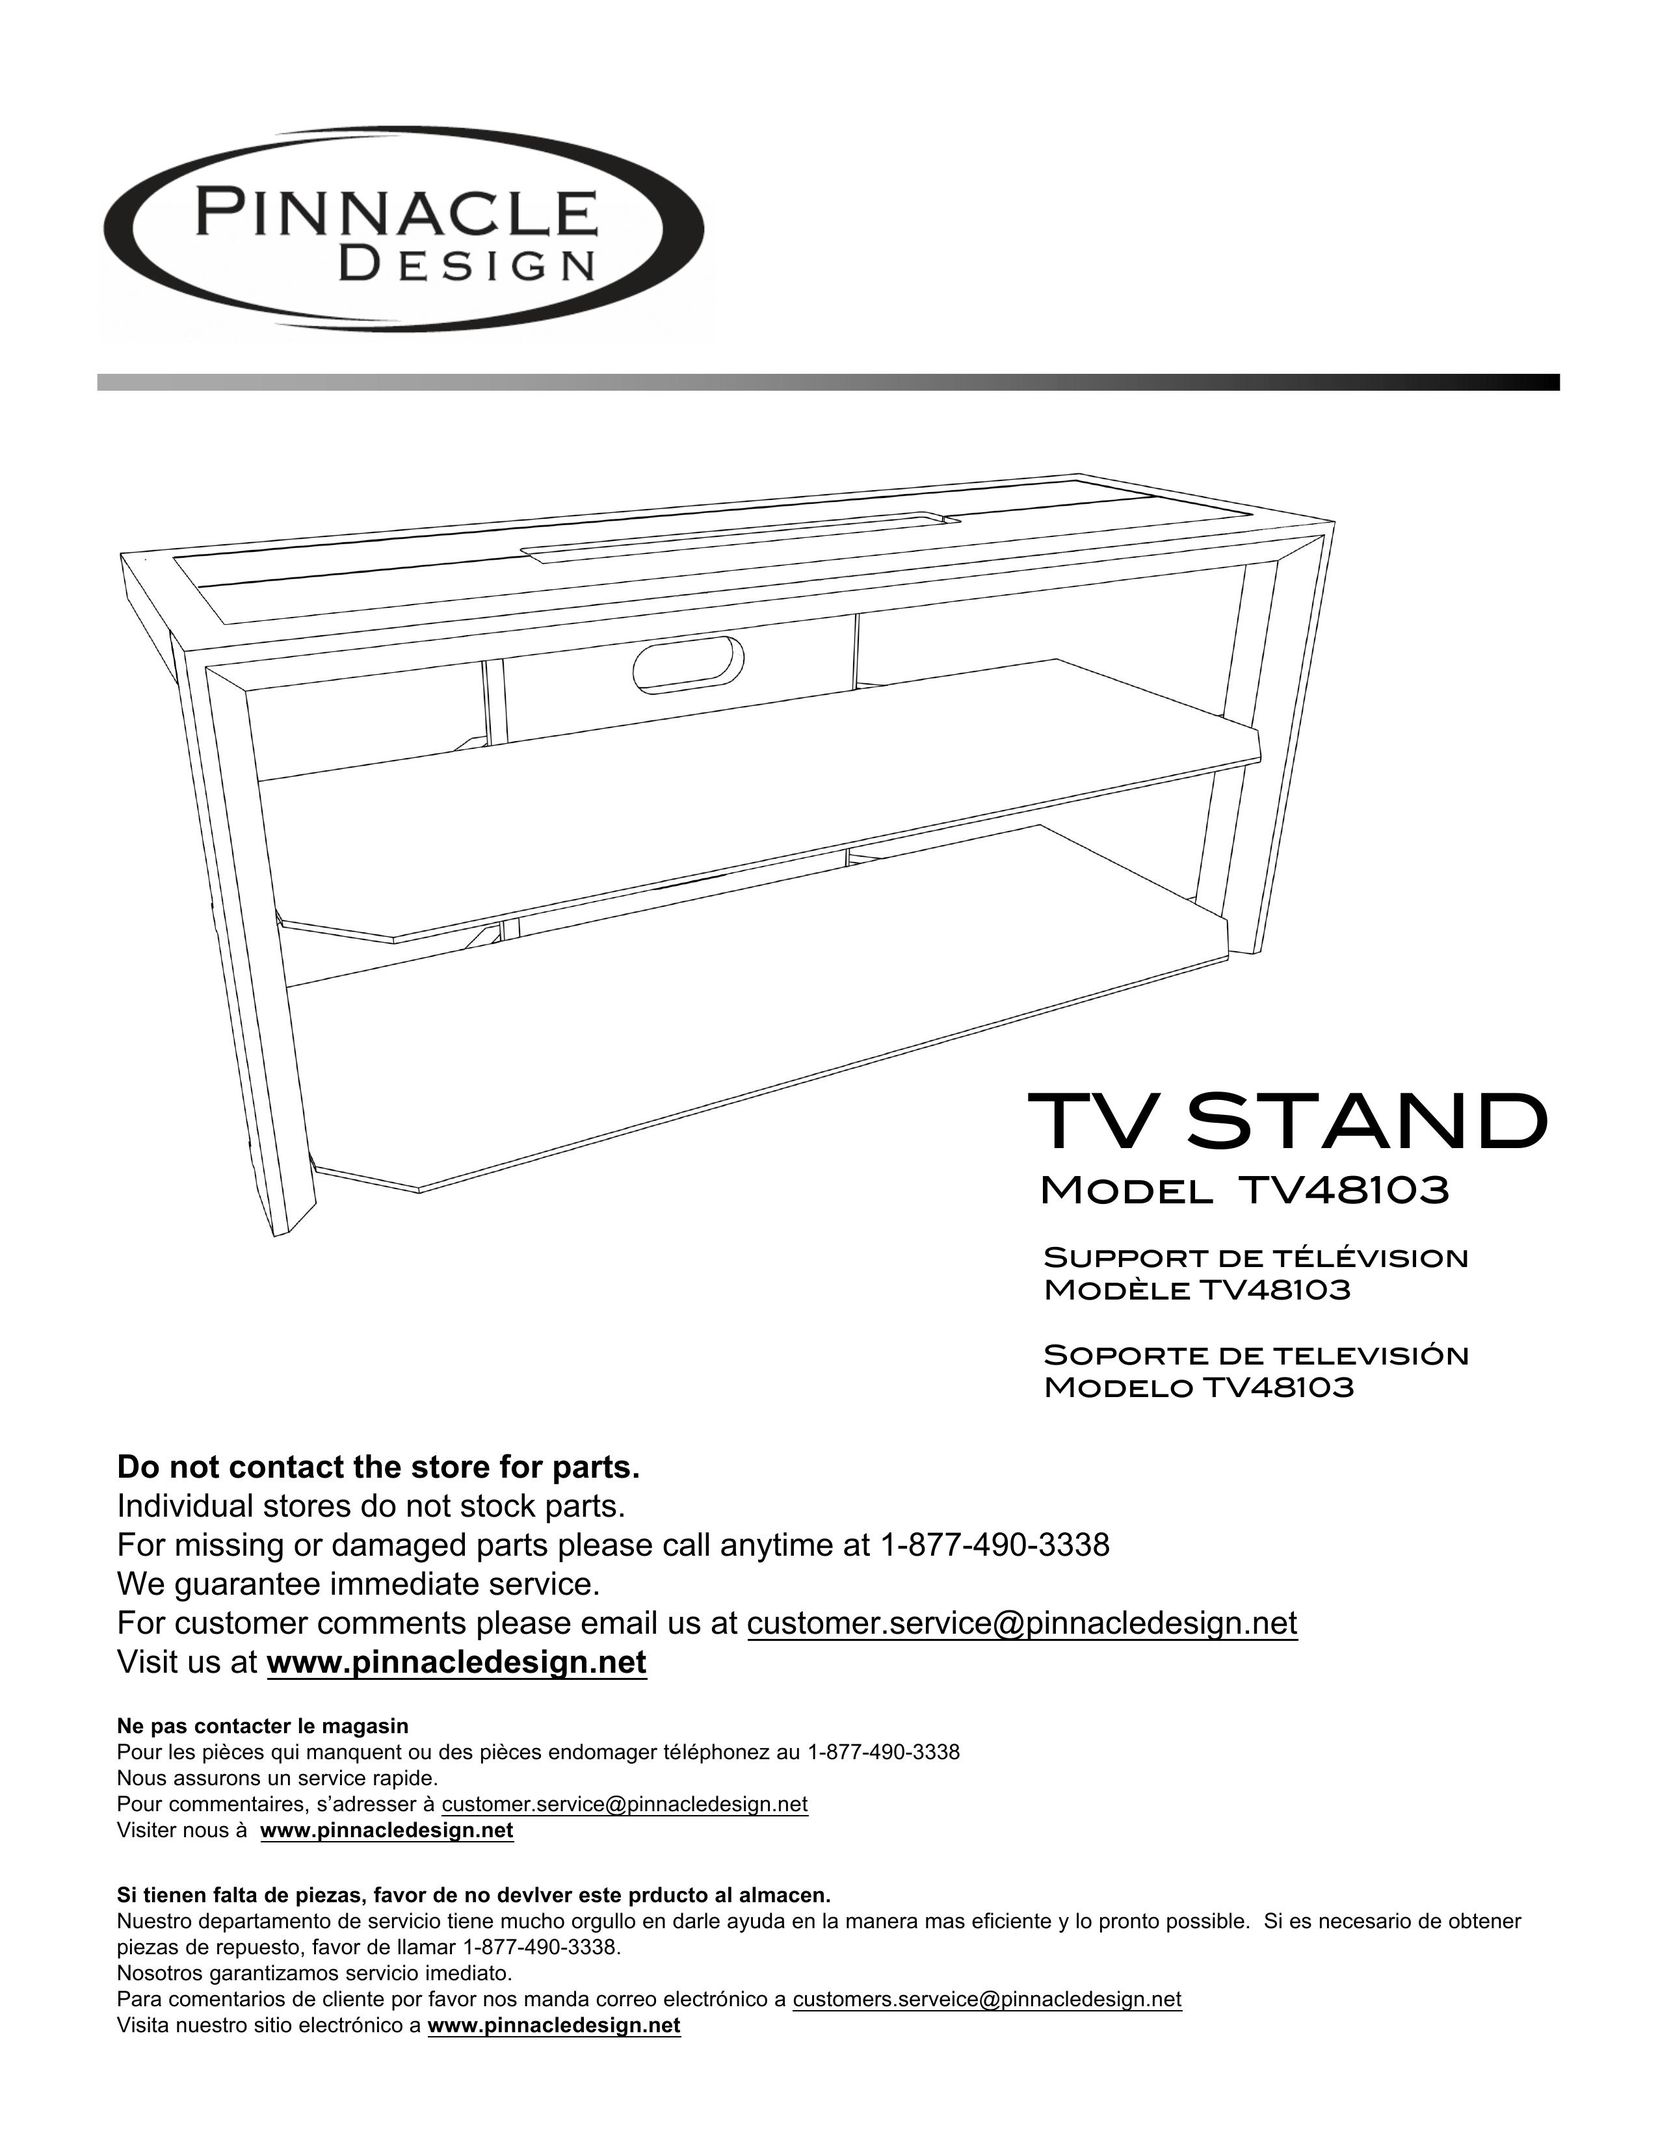 Pinnacle Design TV48103 TV Video Accessories User Manual